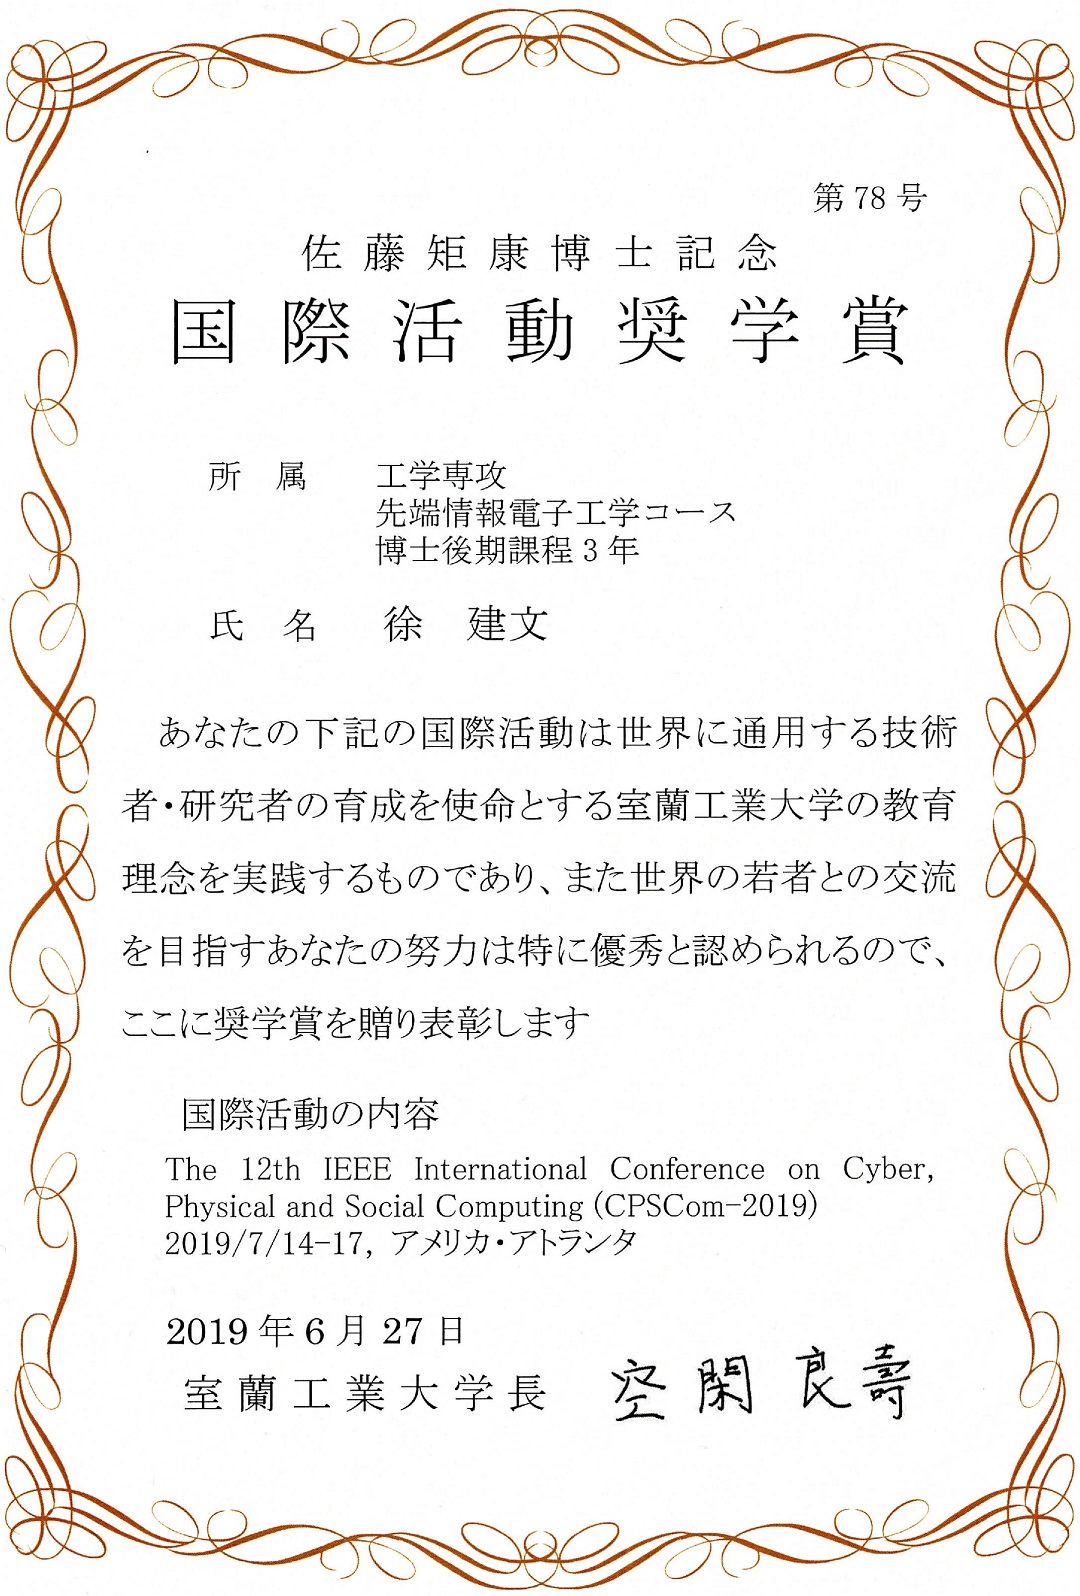 Sato Noriyasu Memorial Scholarship Award for International Activities